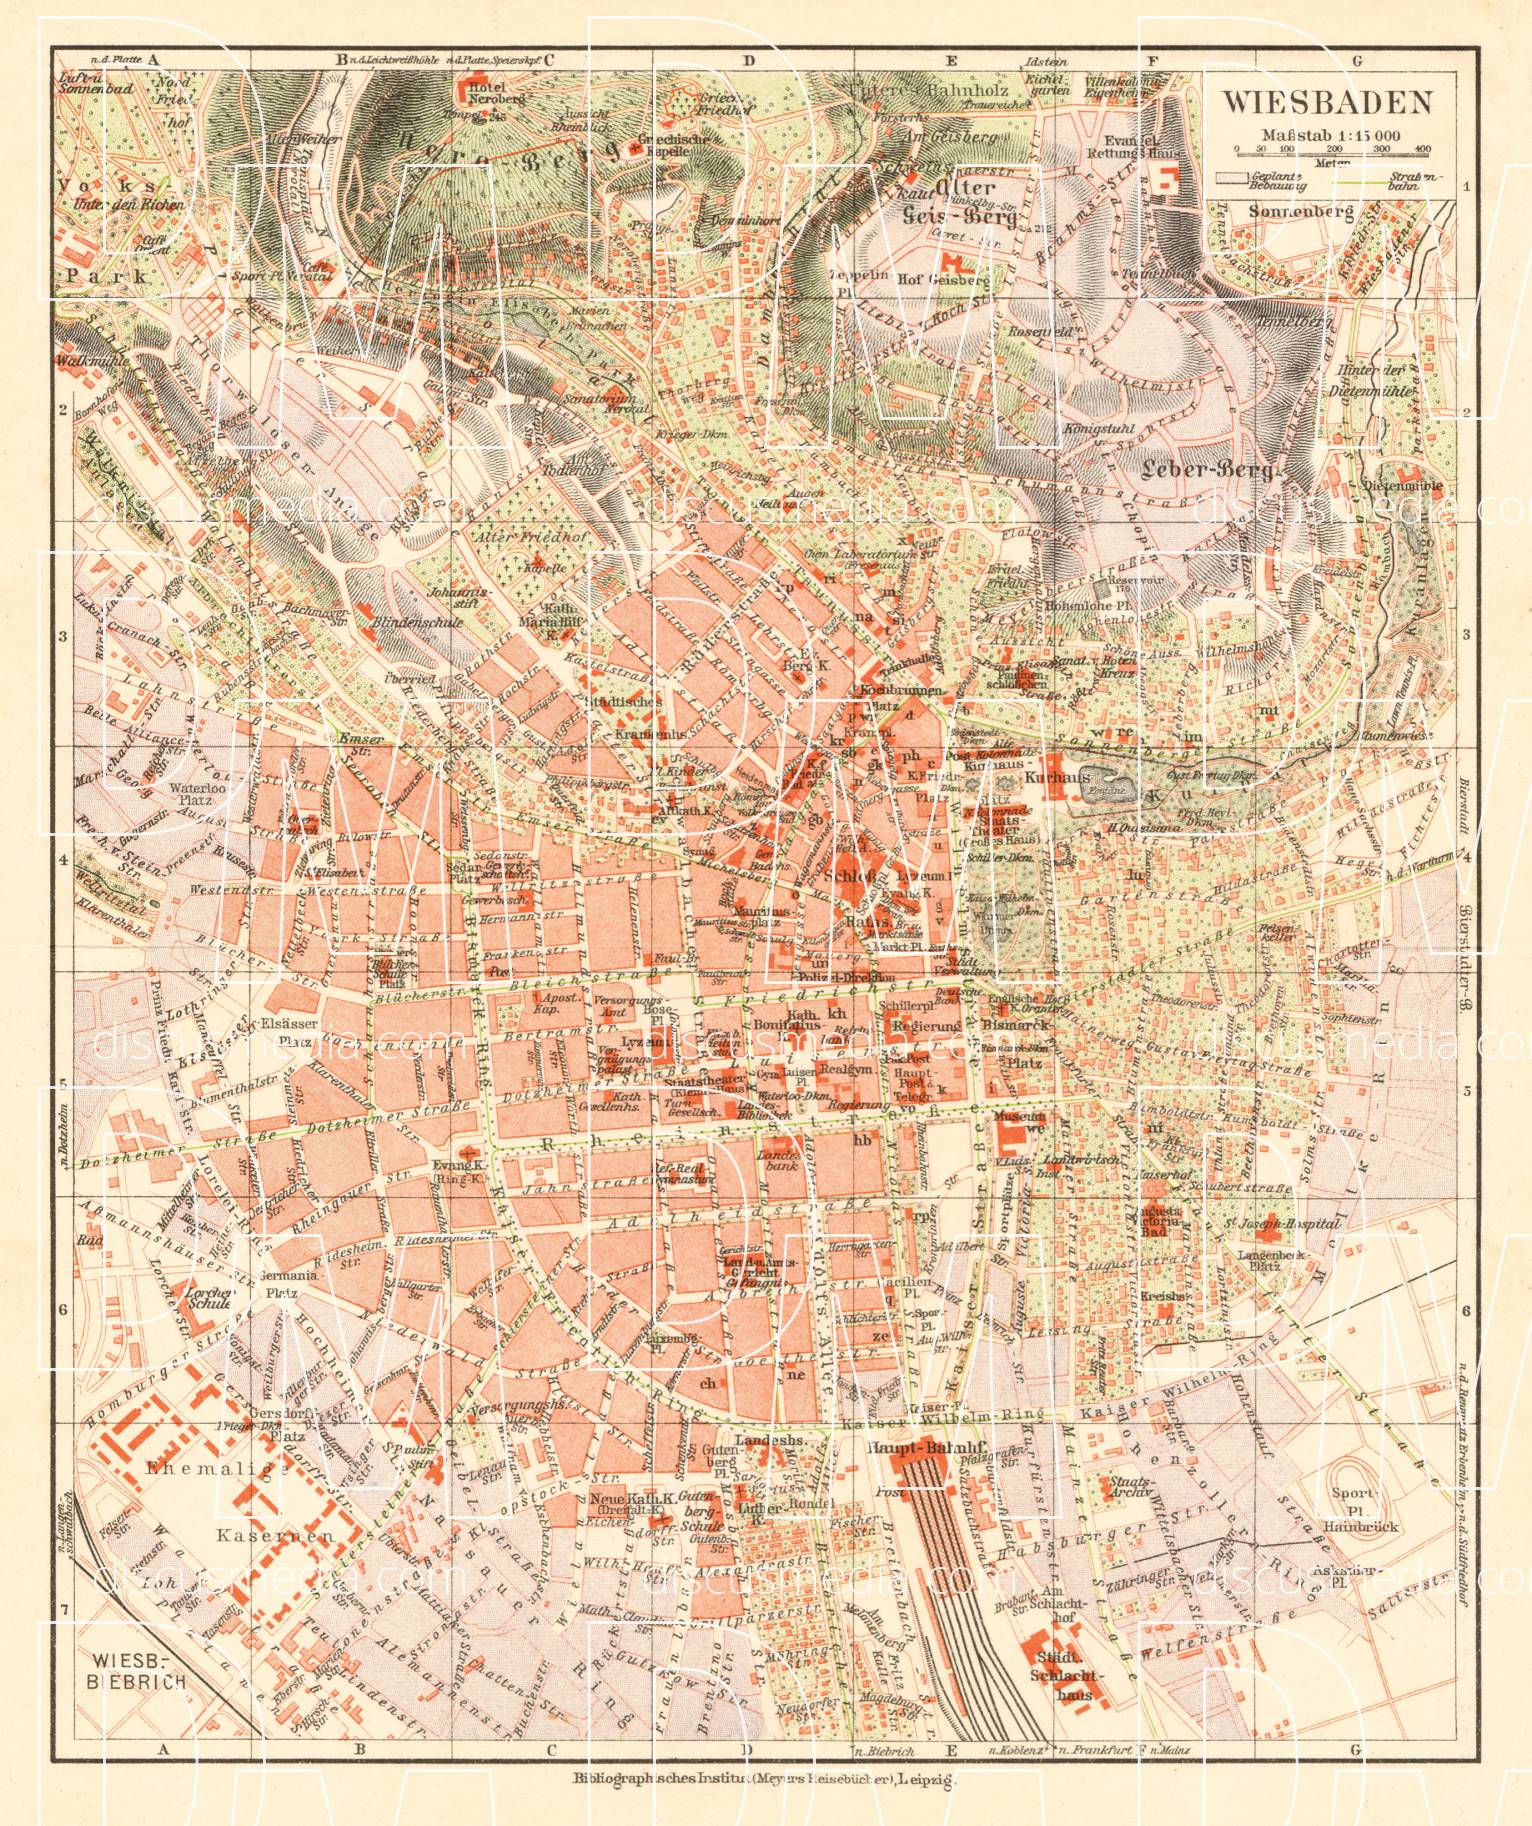 Old map of Wiesbaden in 1927. Buy vintage map replica poster print or